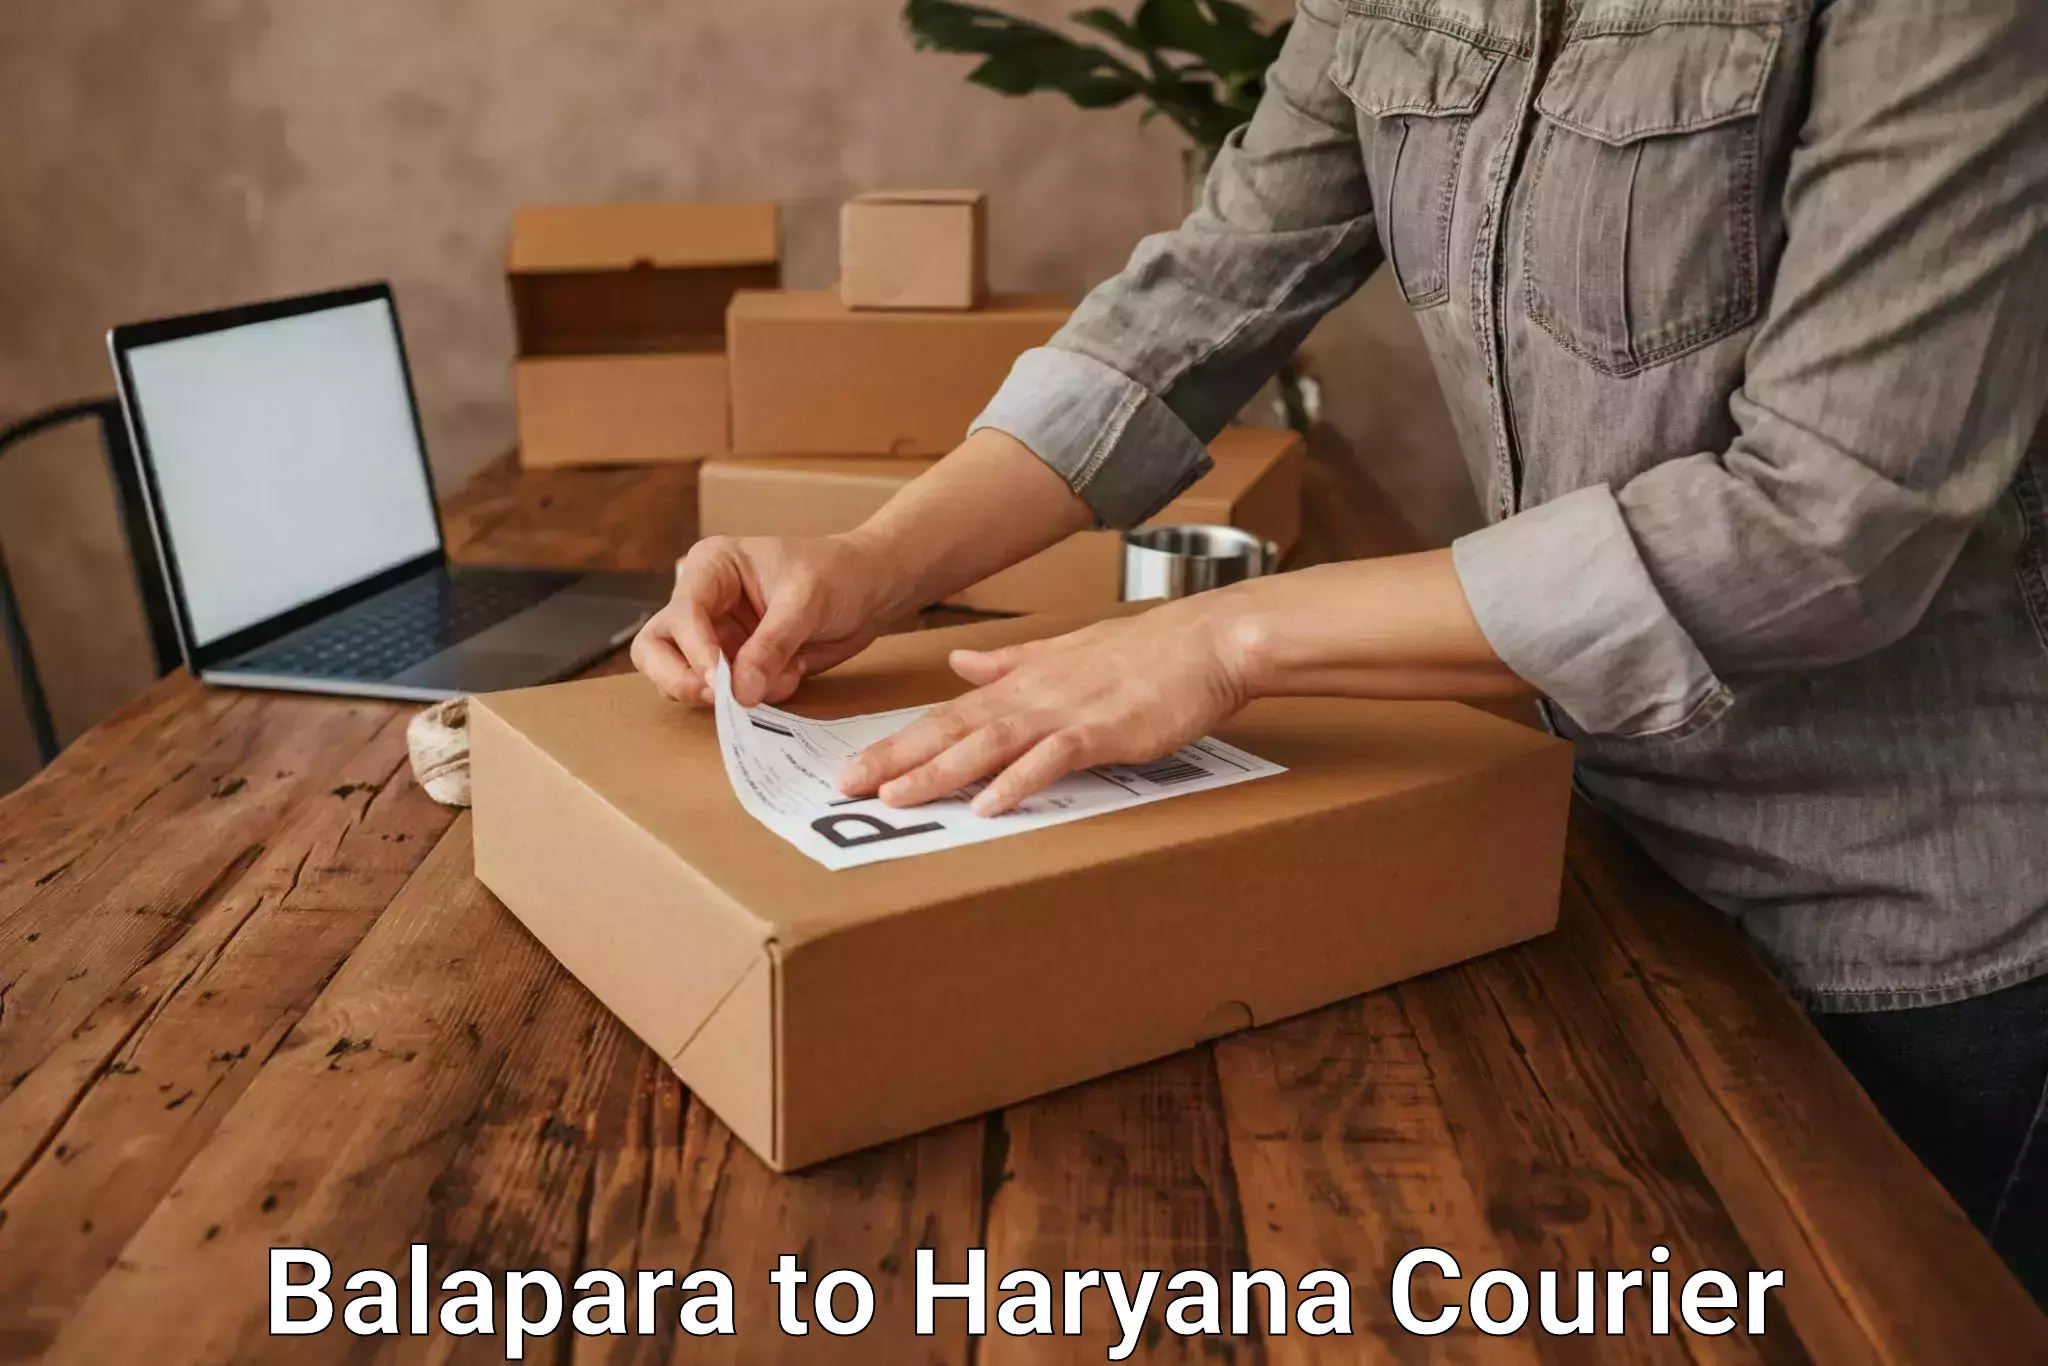 Modern courier technology Balapara to Chaudhary Charan Singh Haryana Agricultural University Hisar